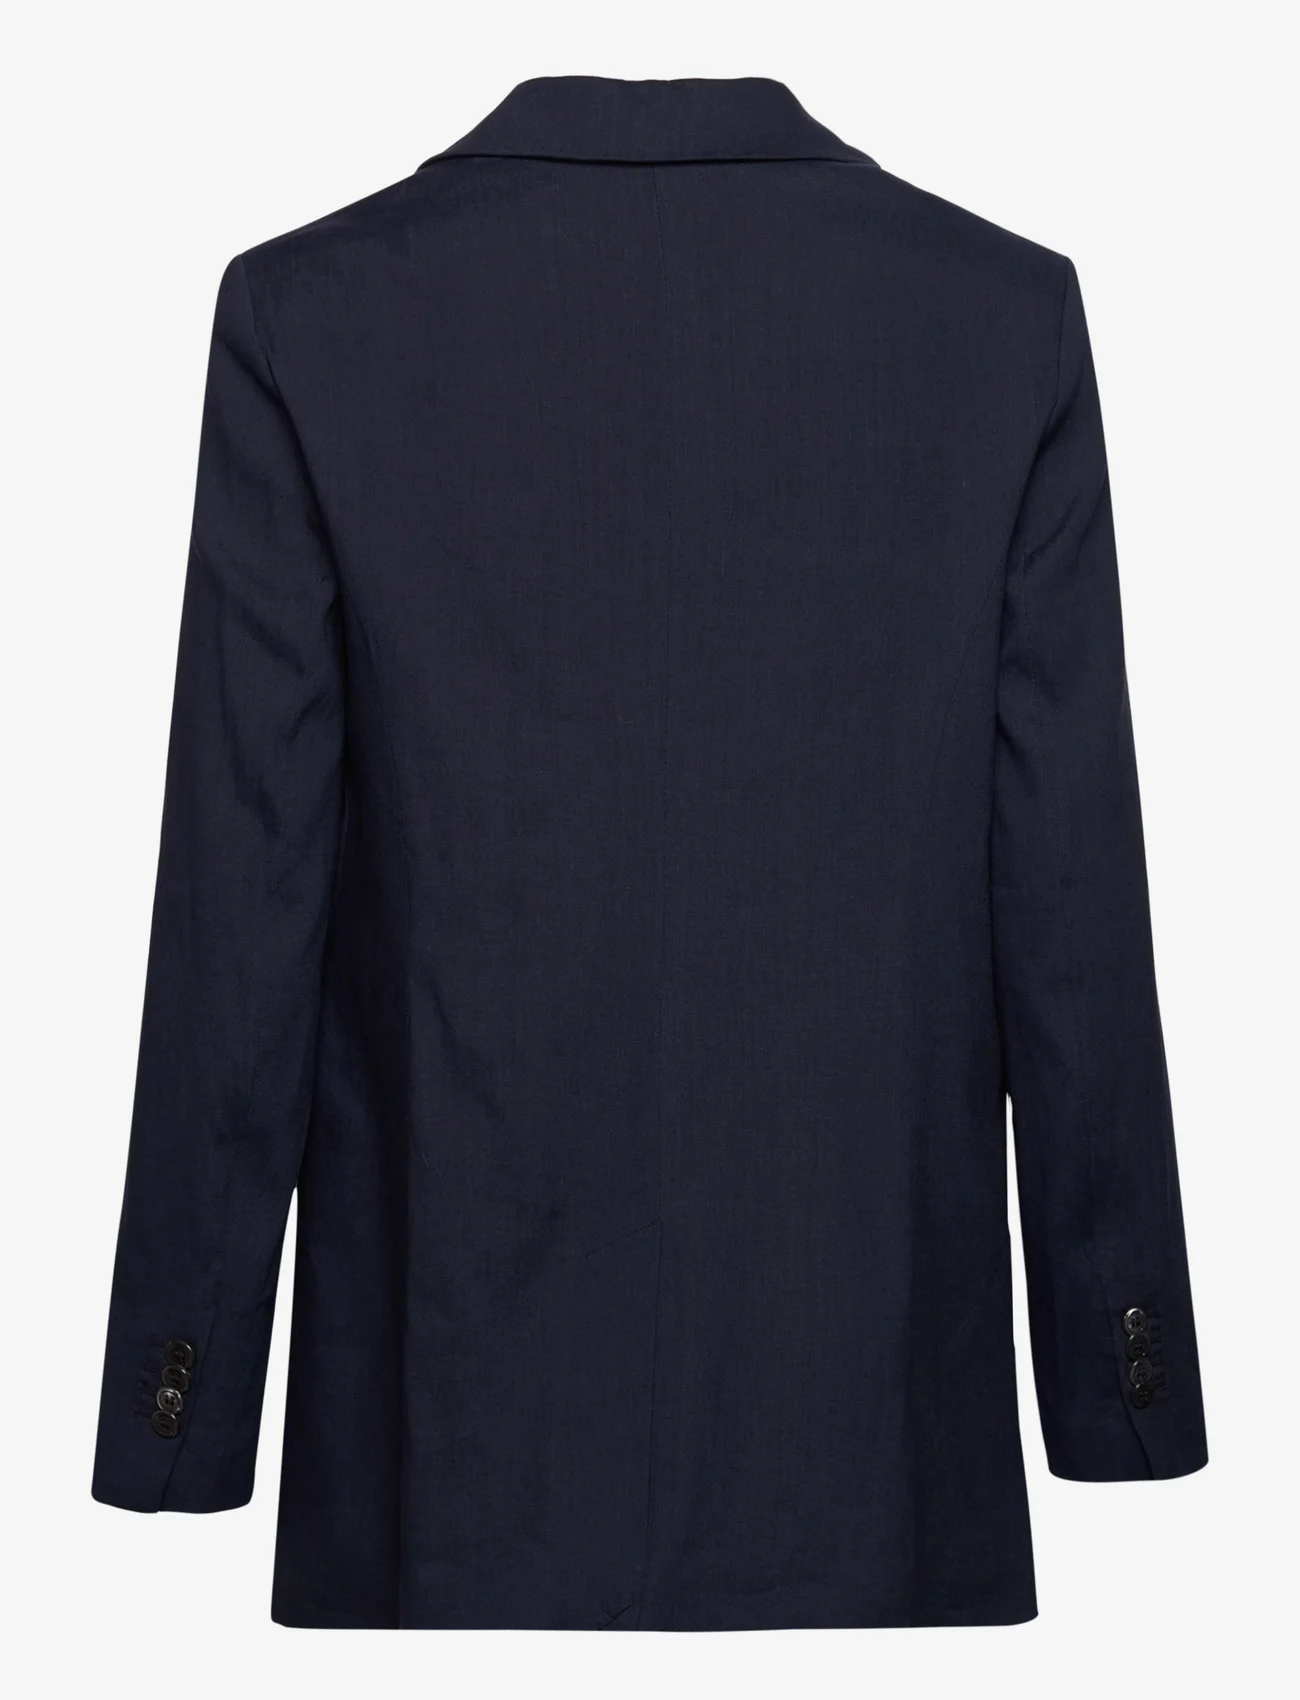 GANT - REG STRETCH LINEN BLAZER - ballīšu apģērbs par outlet cenām - evening blue - 1